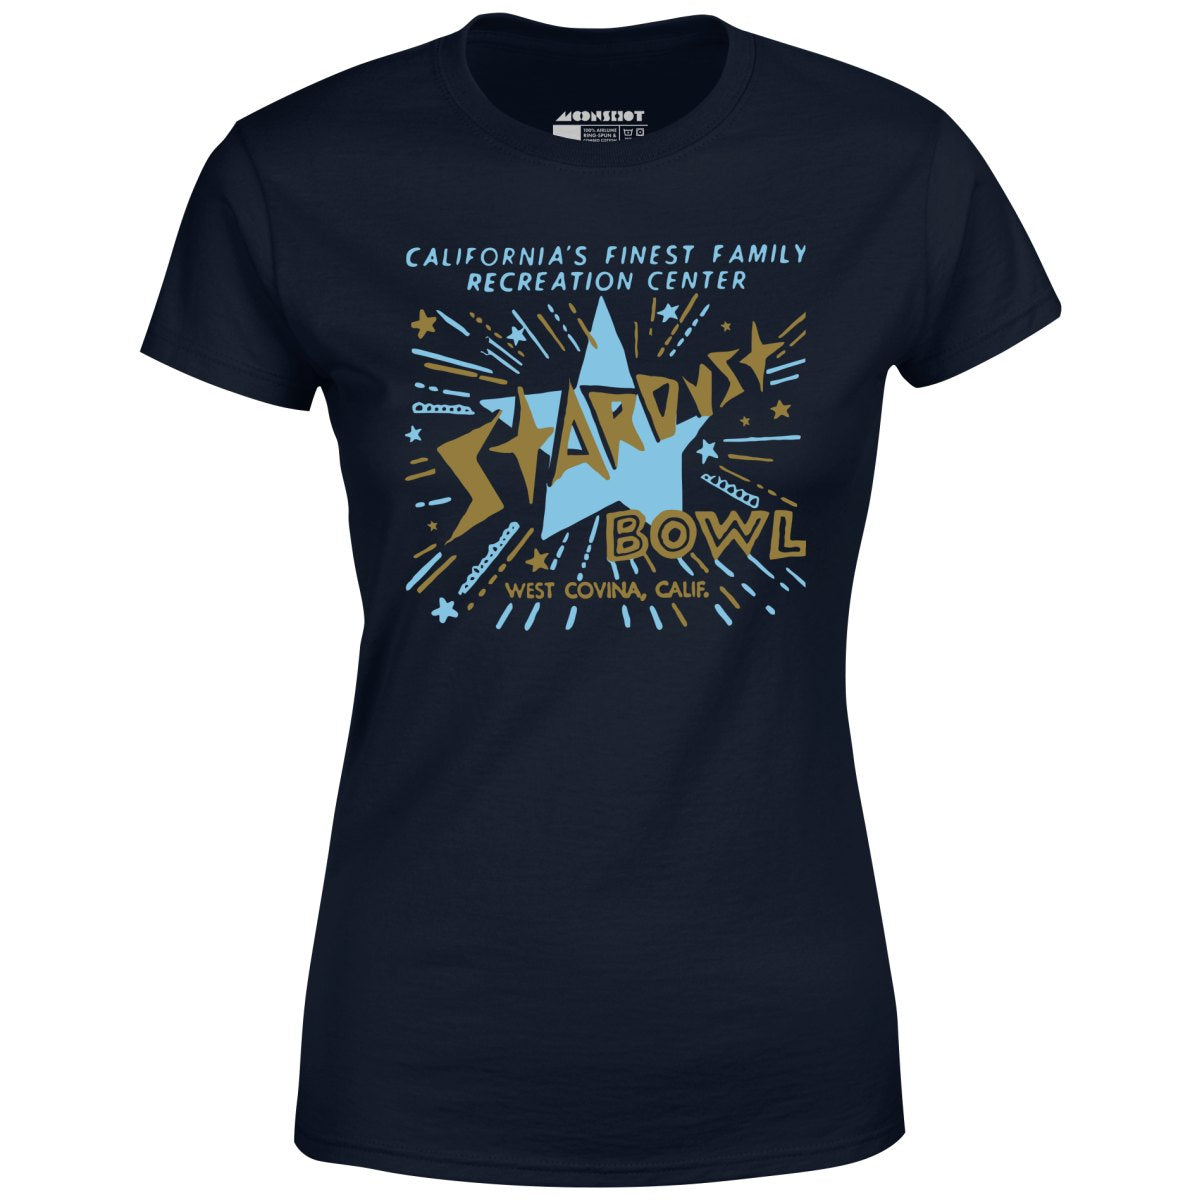 Stardust Bowl - West Covina, CA - Vintage Bowling Alley - Women's T-Shirt